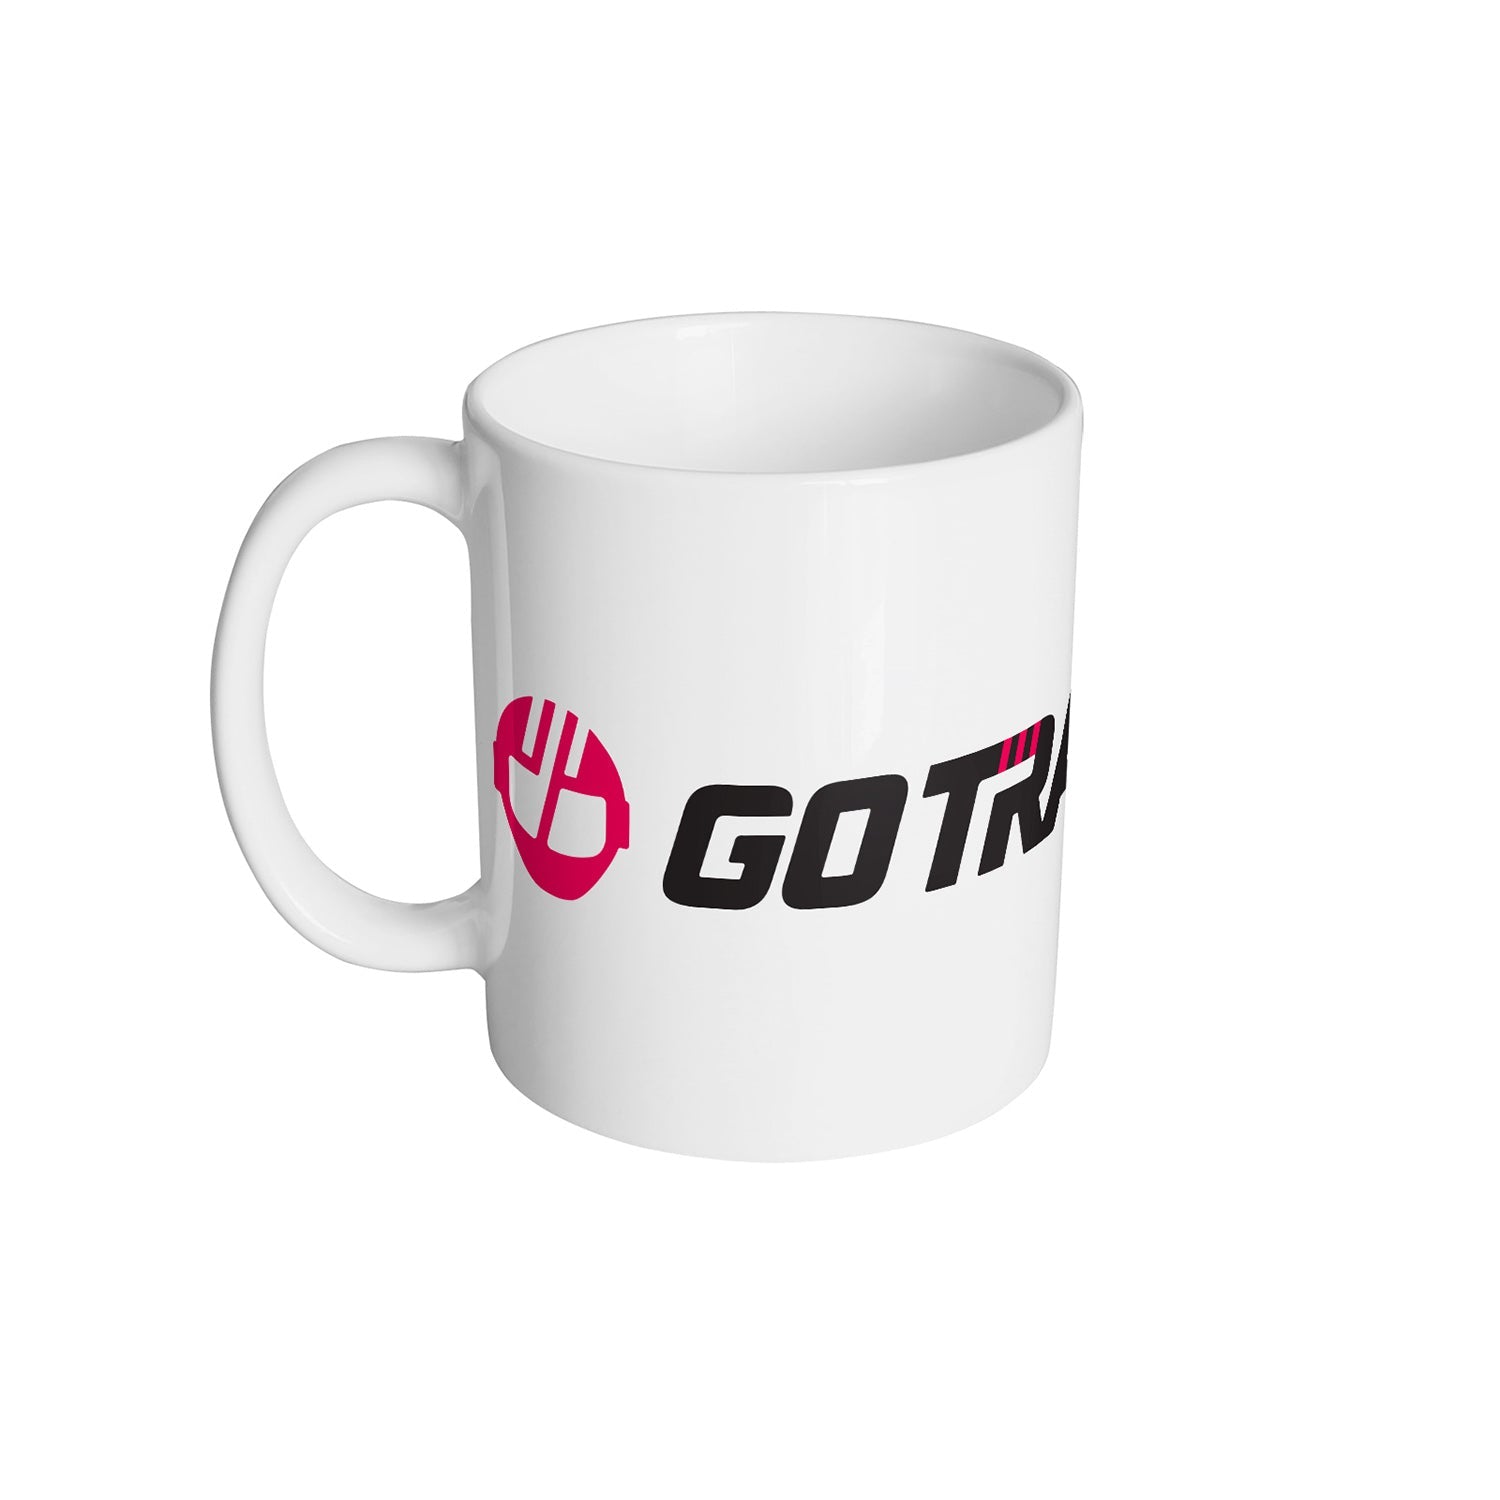 GOTRAX Coffee Mug 10oz - GOTRAX